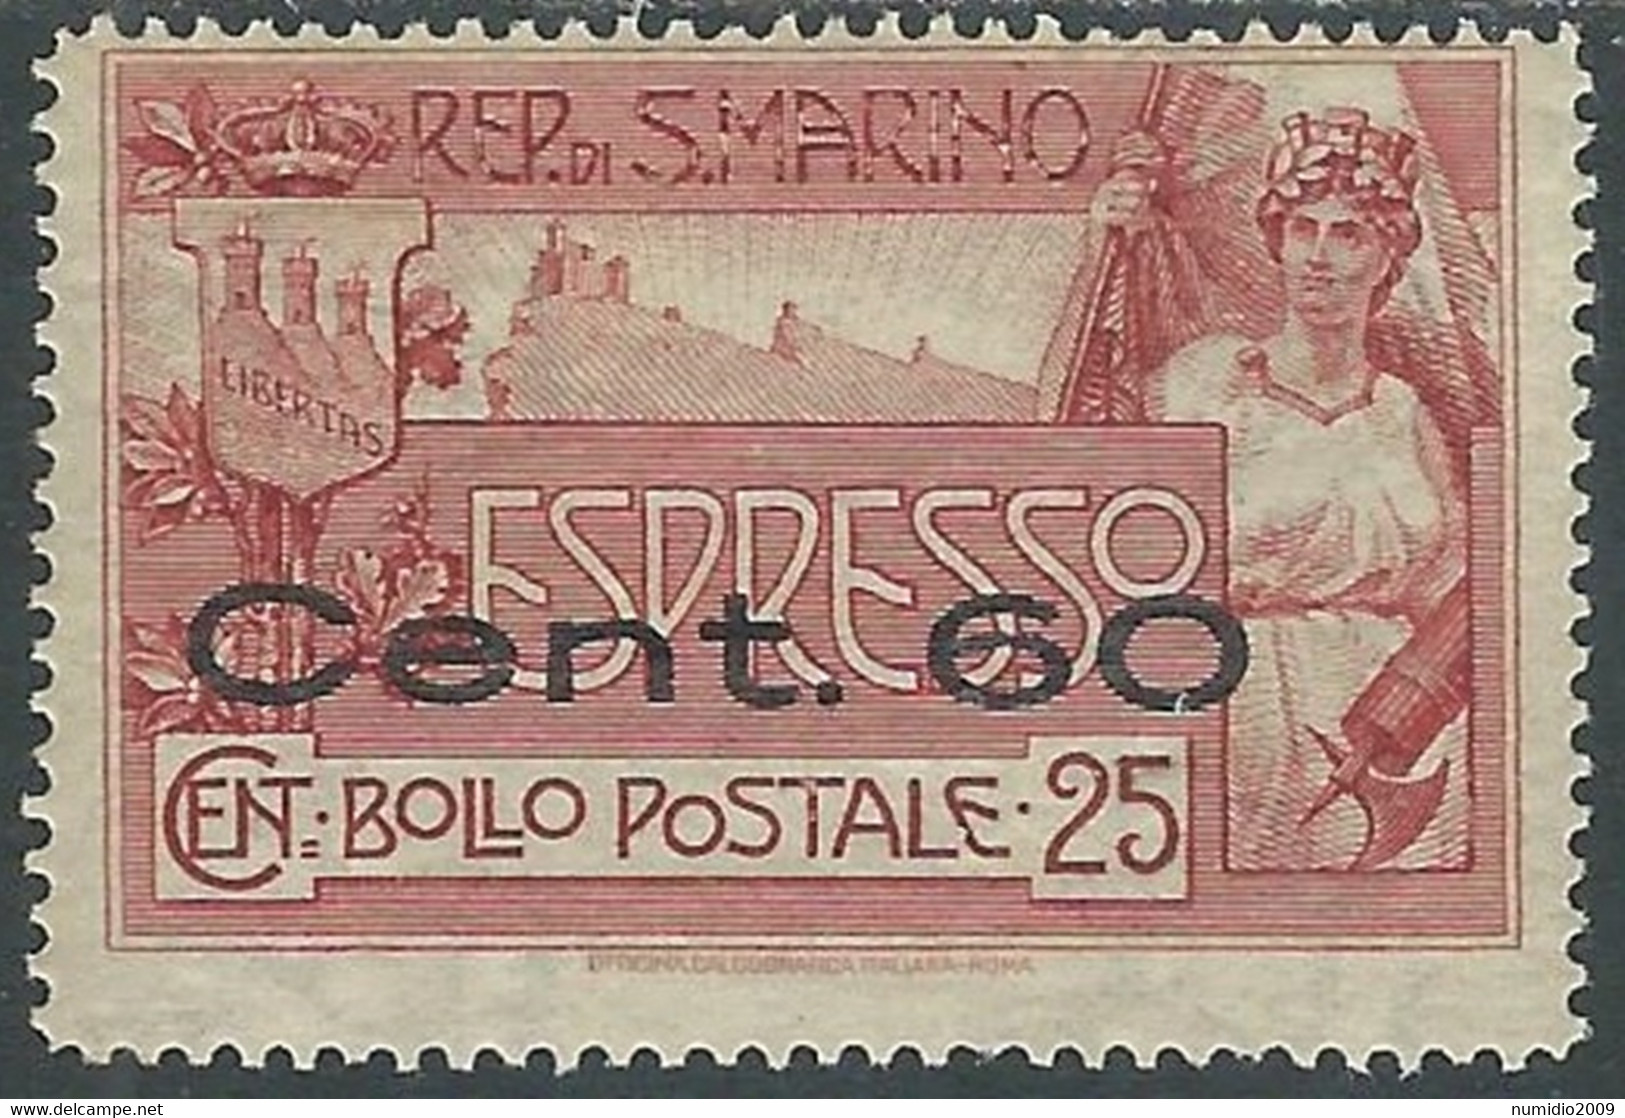 1923 SAN MARINO ESPRESSO 60 SU 25 CENT MH * - RD54-4 - Express Letter Stamps